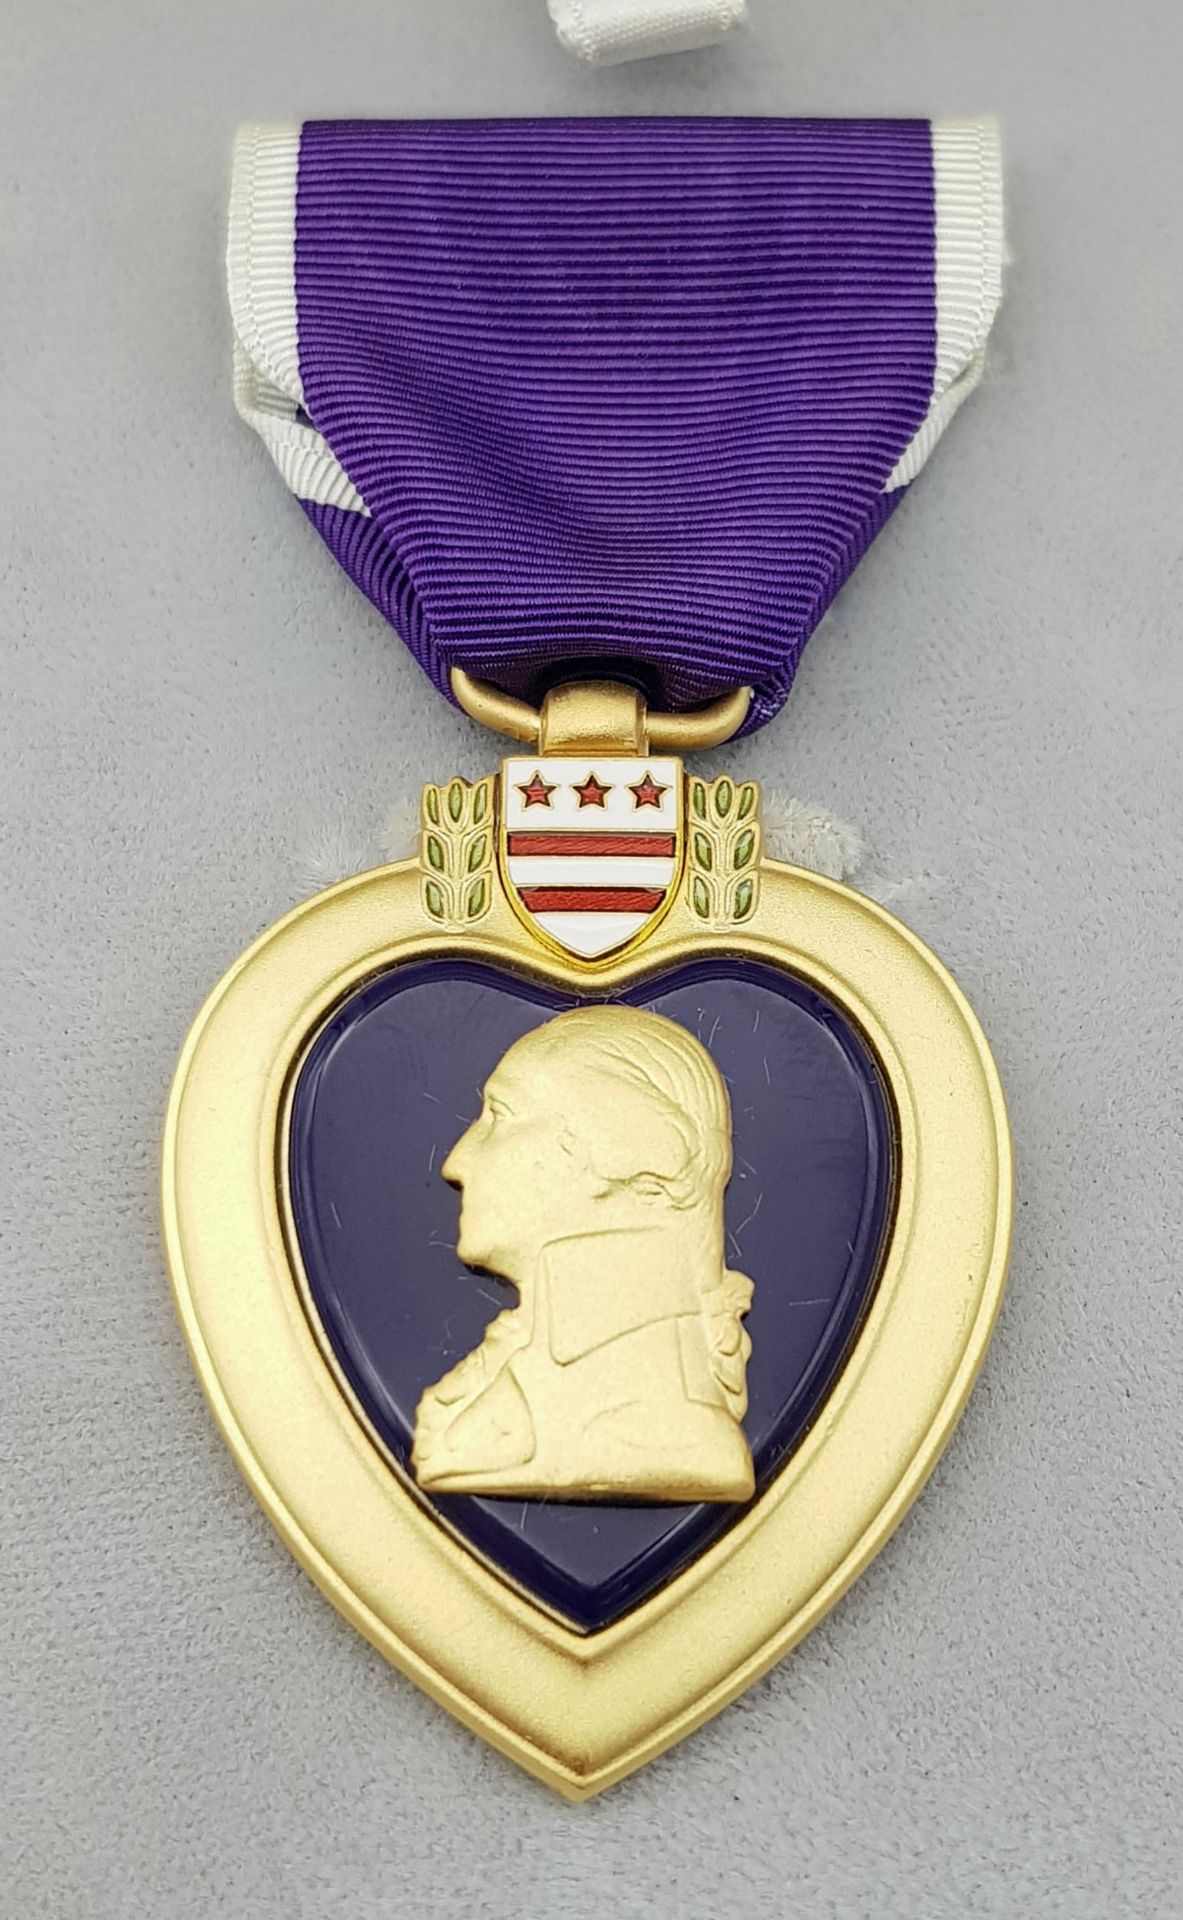 Vietnam War Era Purple Heart Medal. In original presentation box. It is missing the ribbon bars as